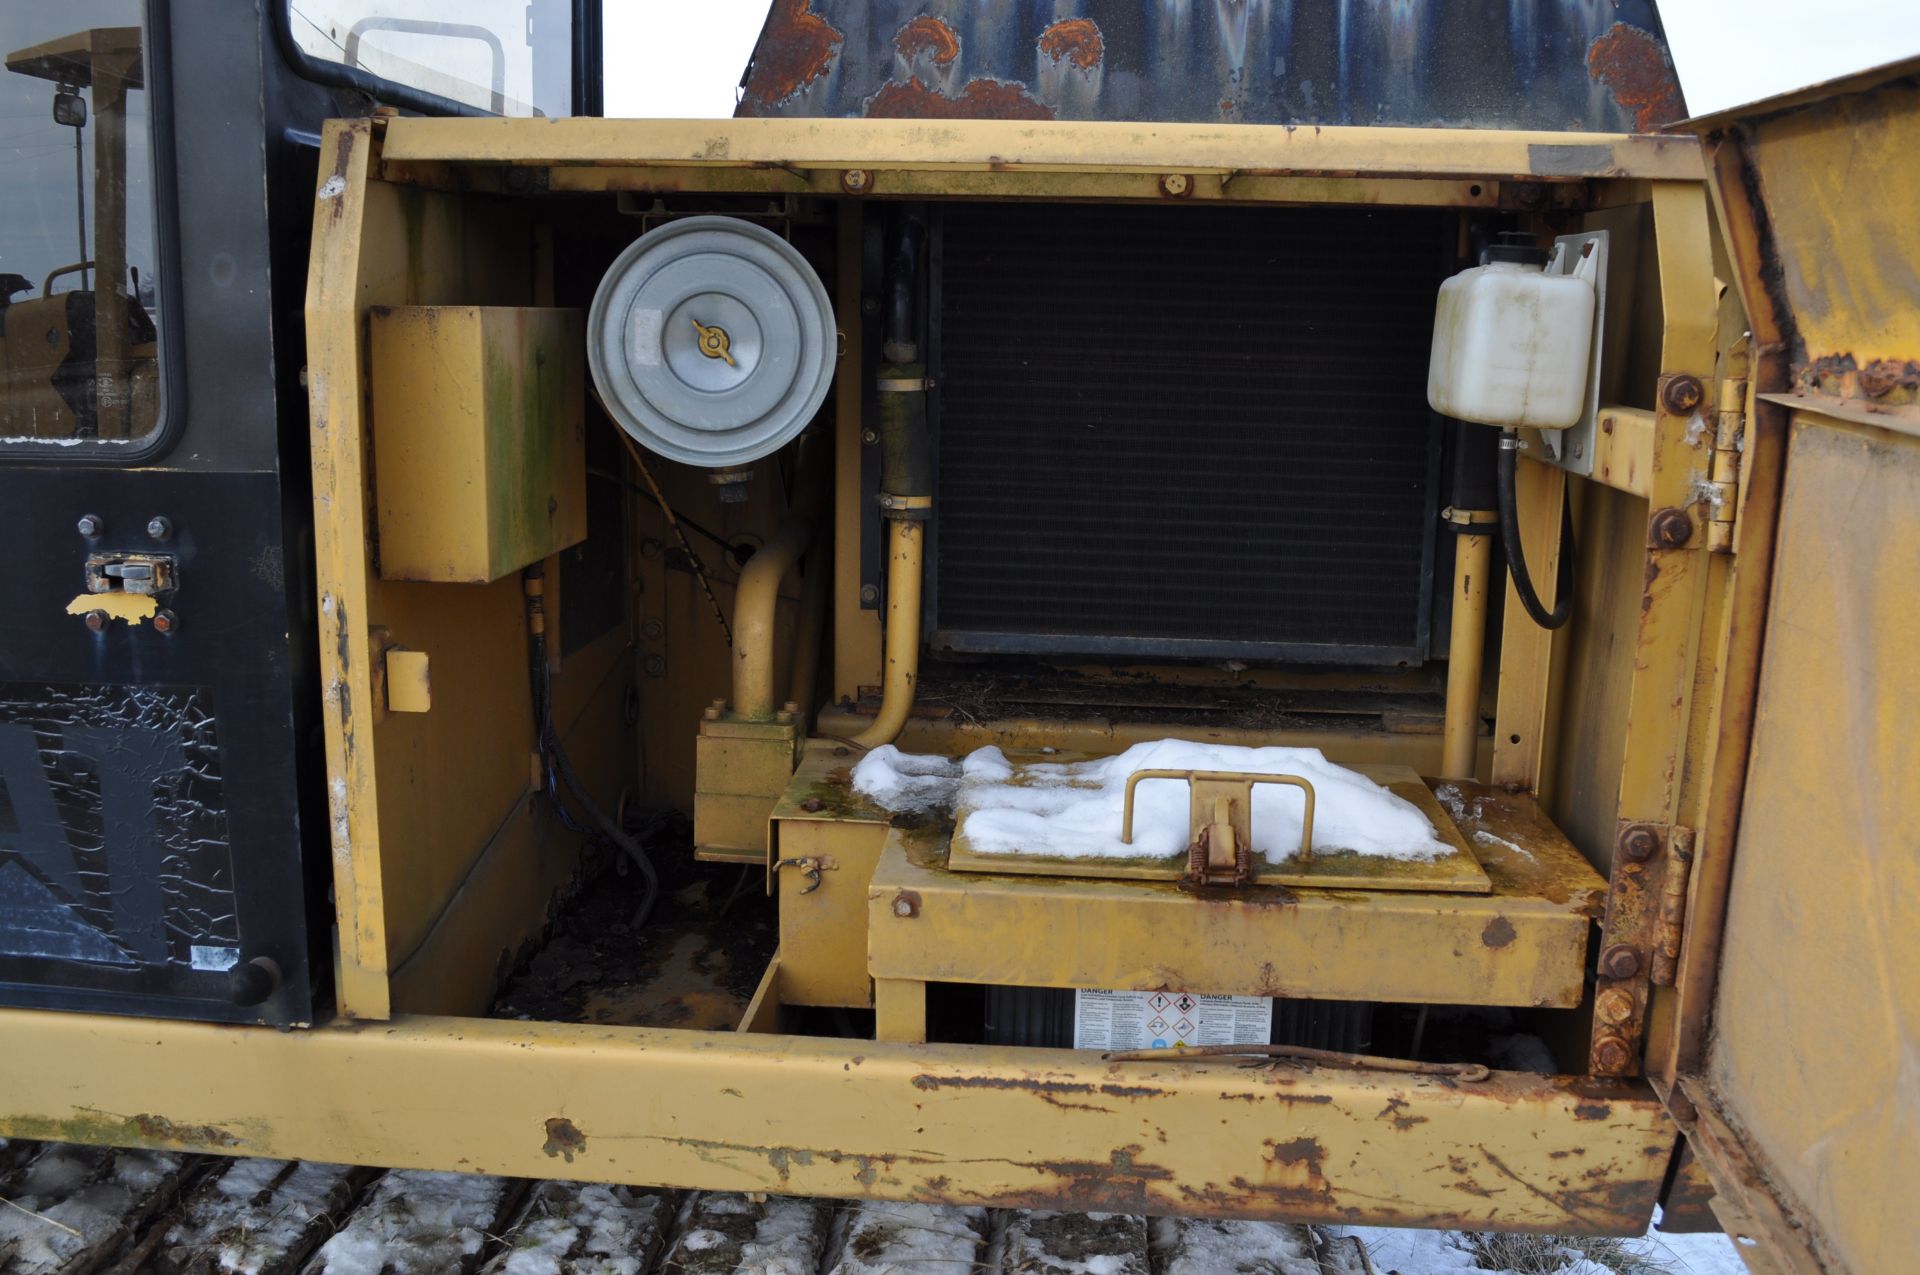 CAT E120B excavator, hyd thumb, 36” bucket, ditch bucket, 5274 hrs, SN 001200 - Image 12 of 16